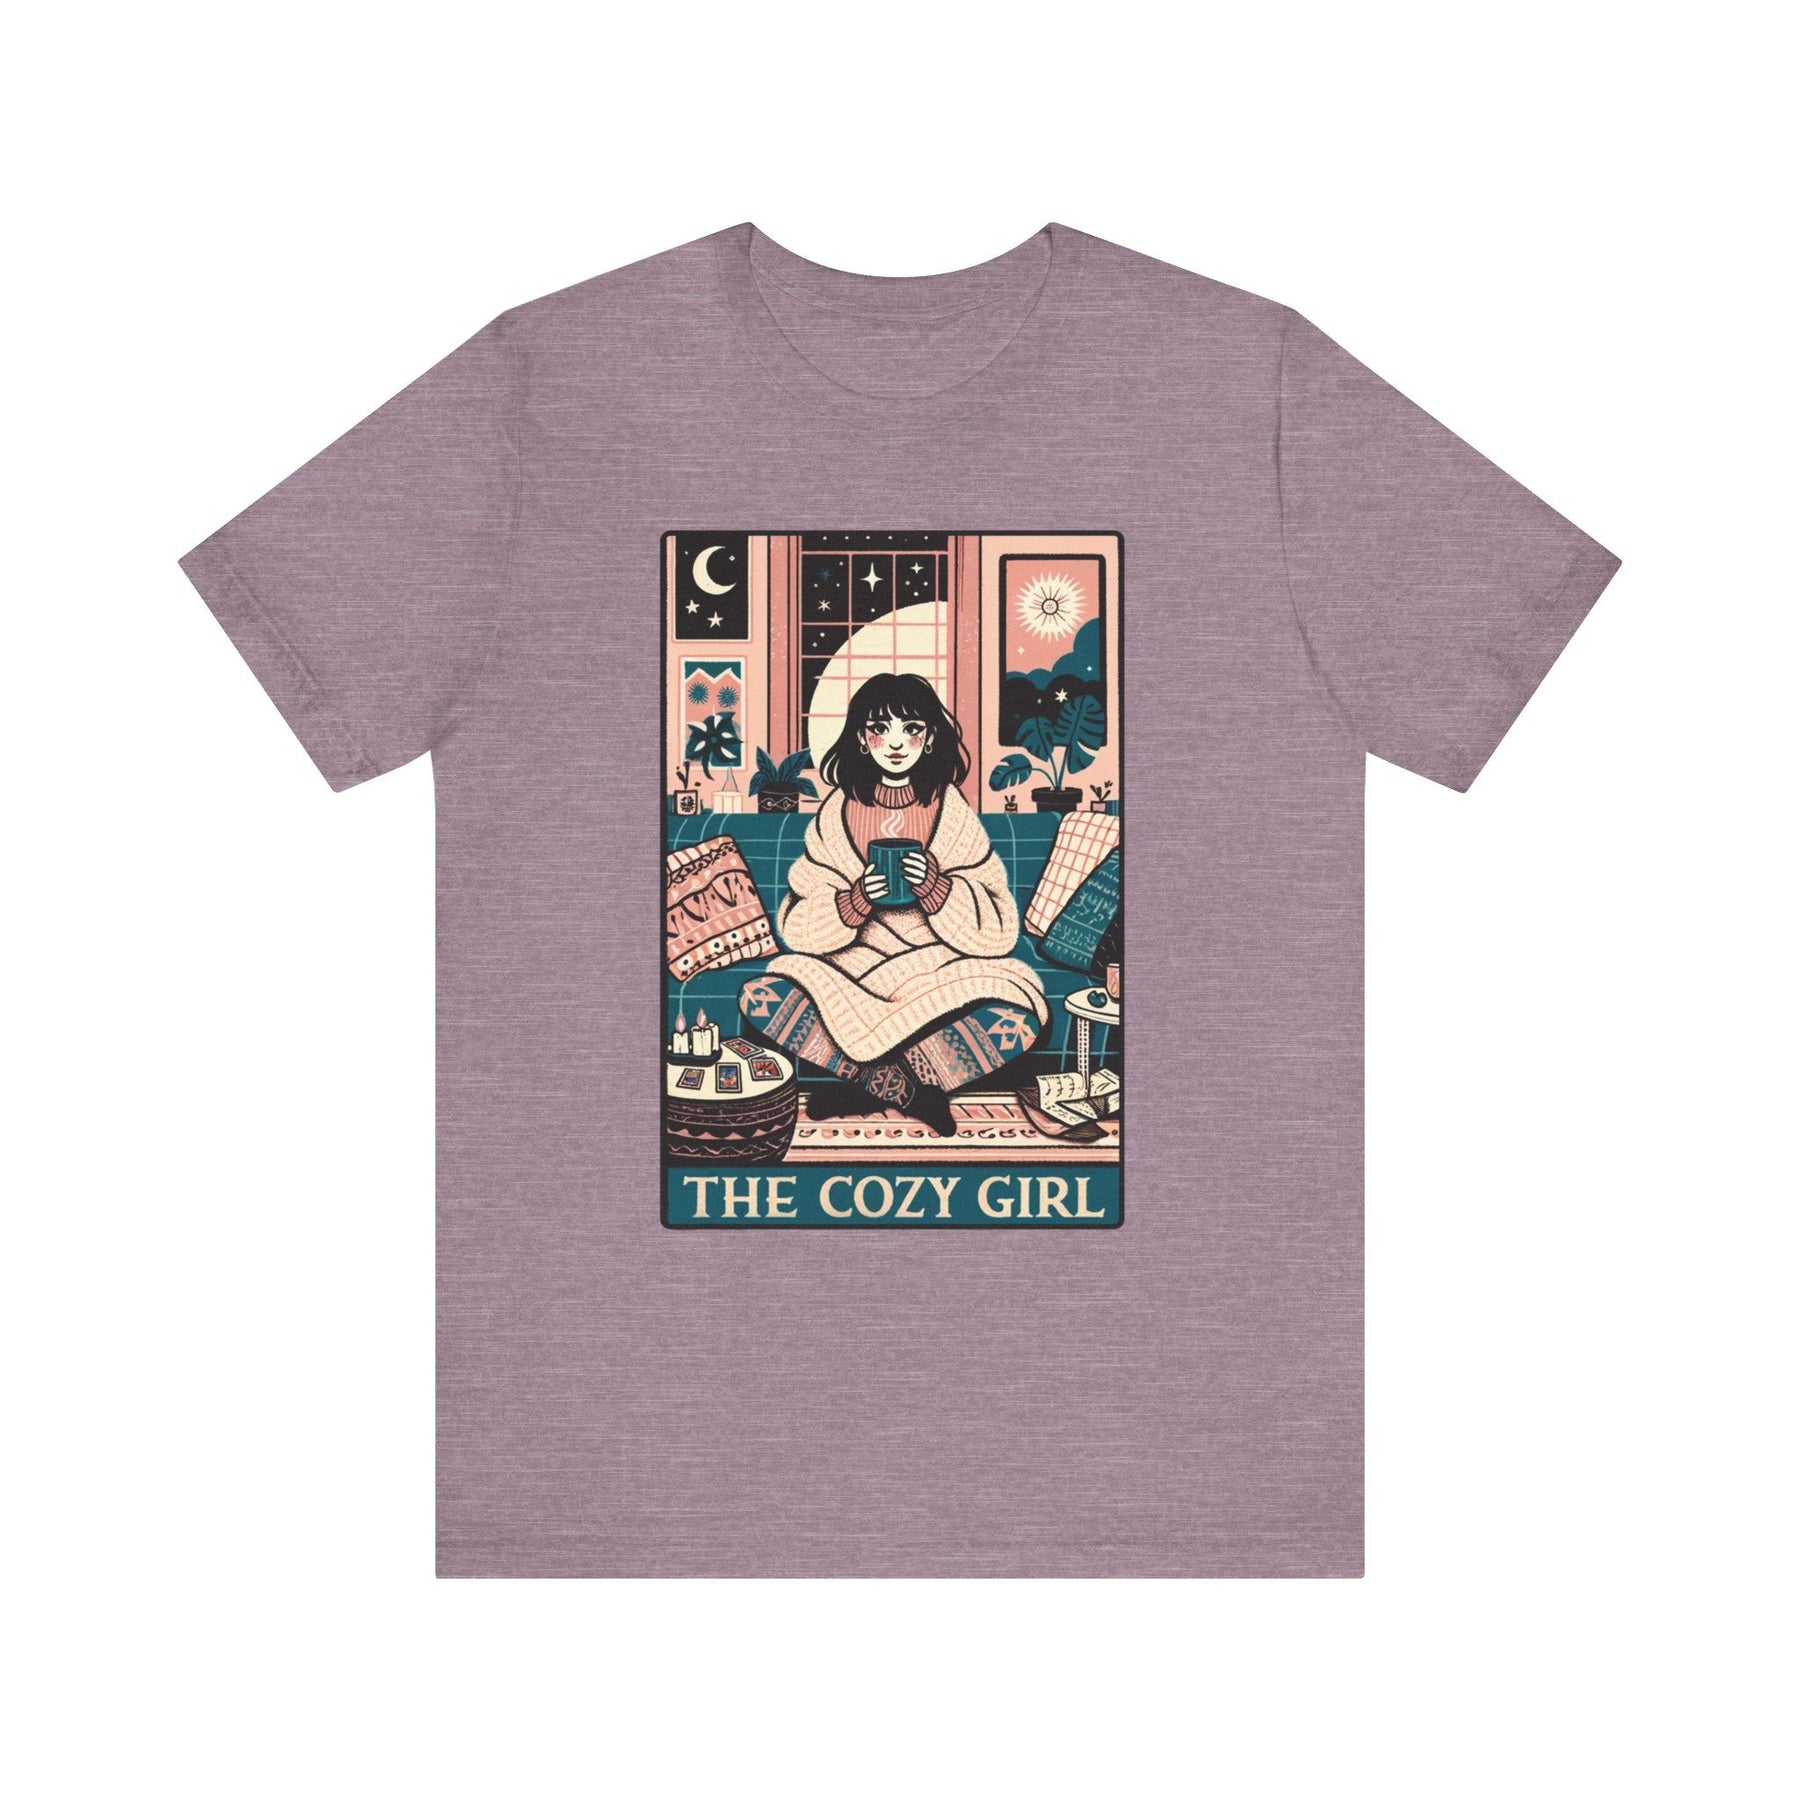 The Cozy Girl Night Tarot Card Short Sleeve Tee - Goth Cloth Co.T - Shirt28751217595286263592